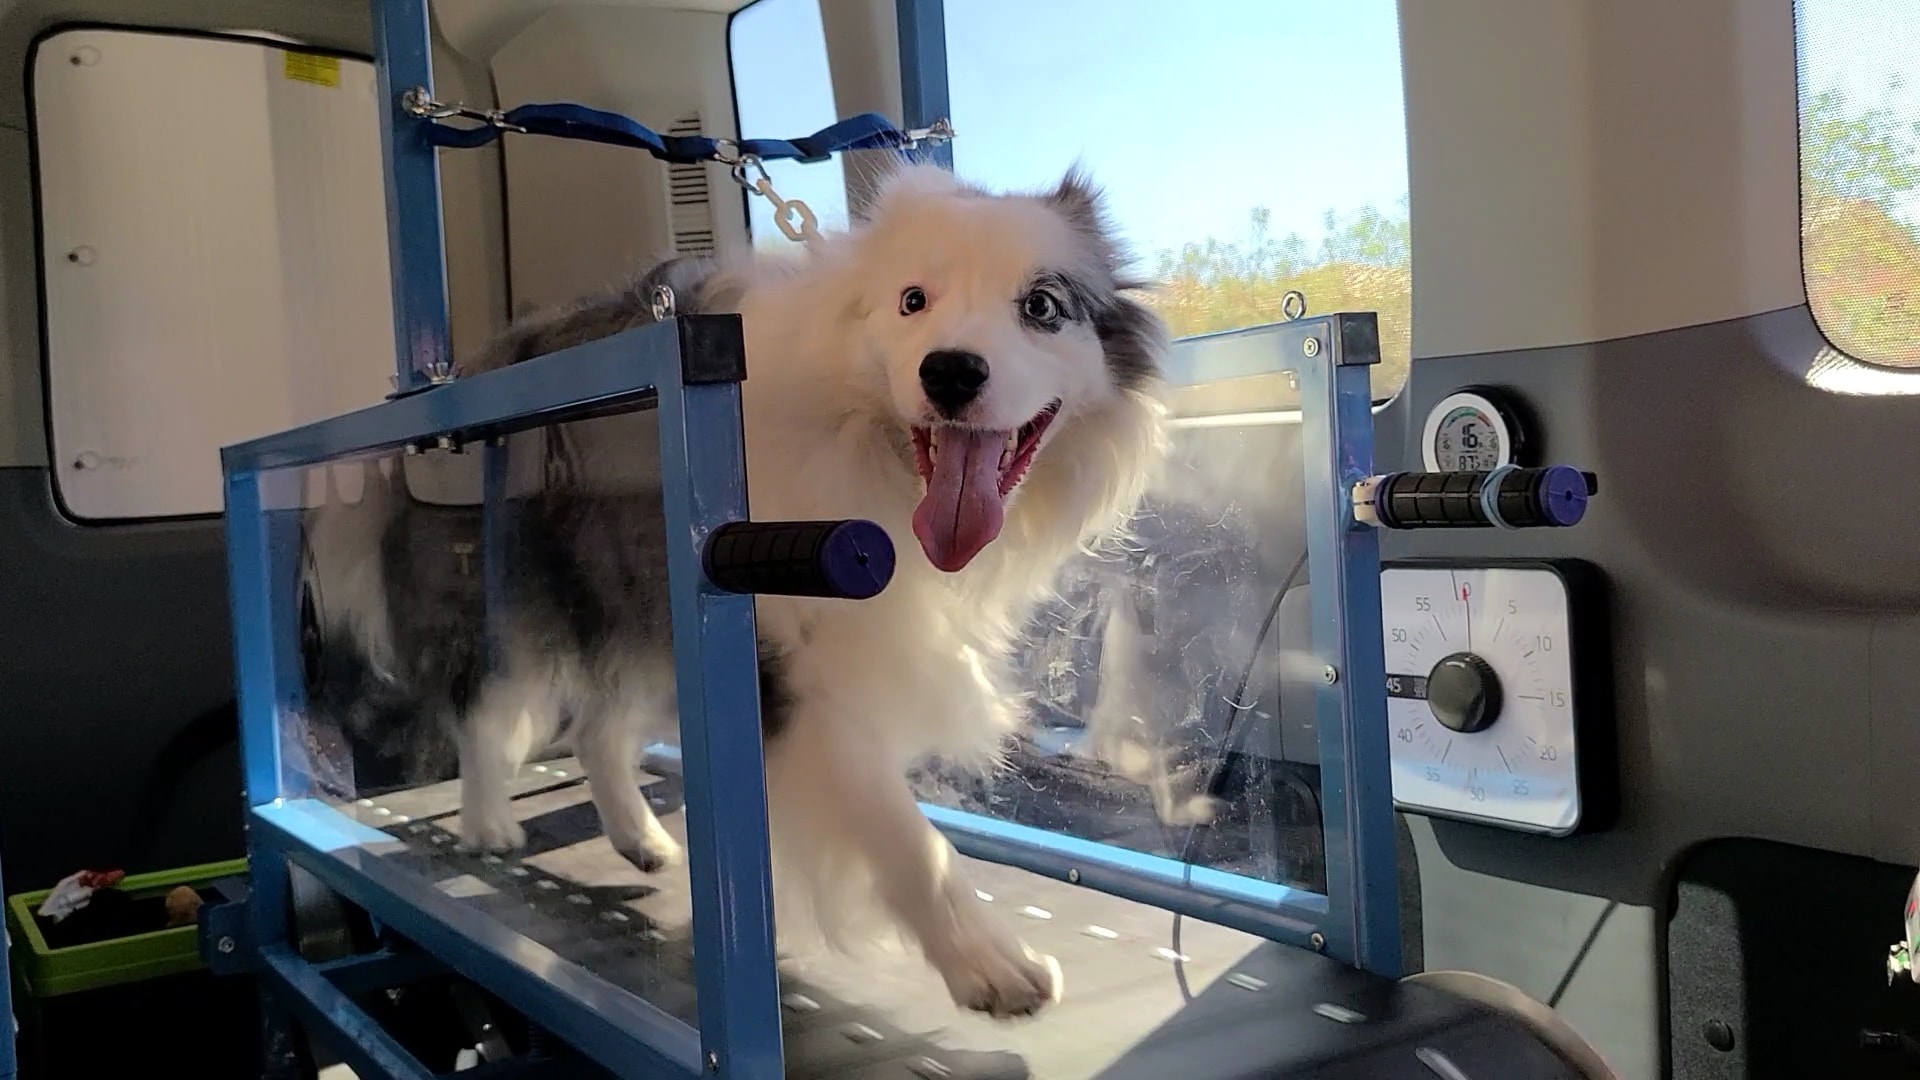 A Dog Treadmill Or Slatmill